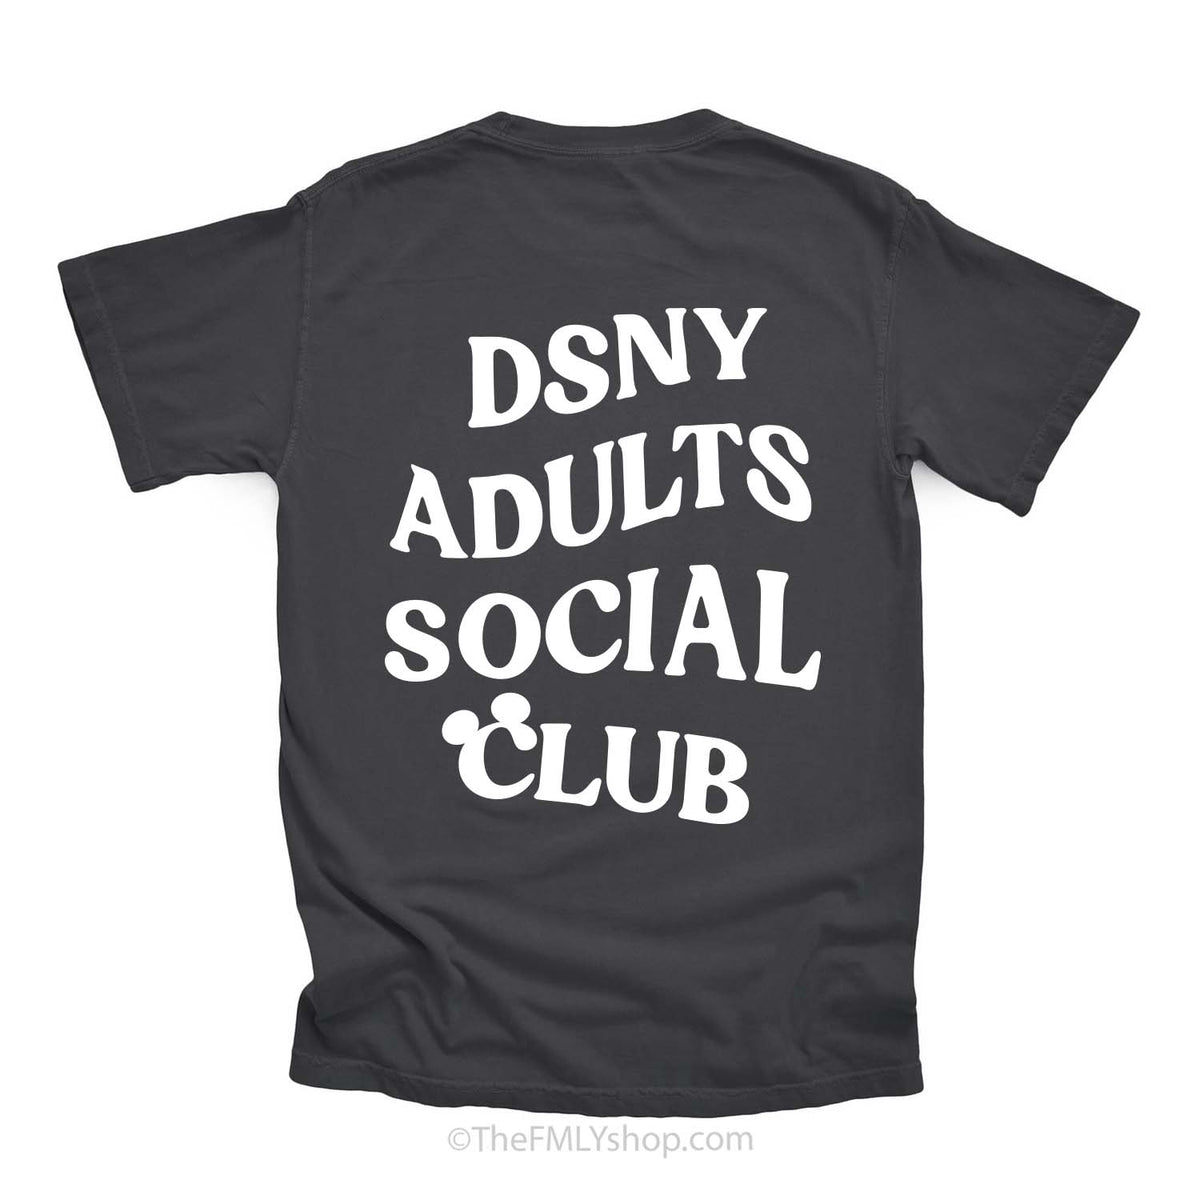 DSNY Adults Social Club Tee